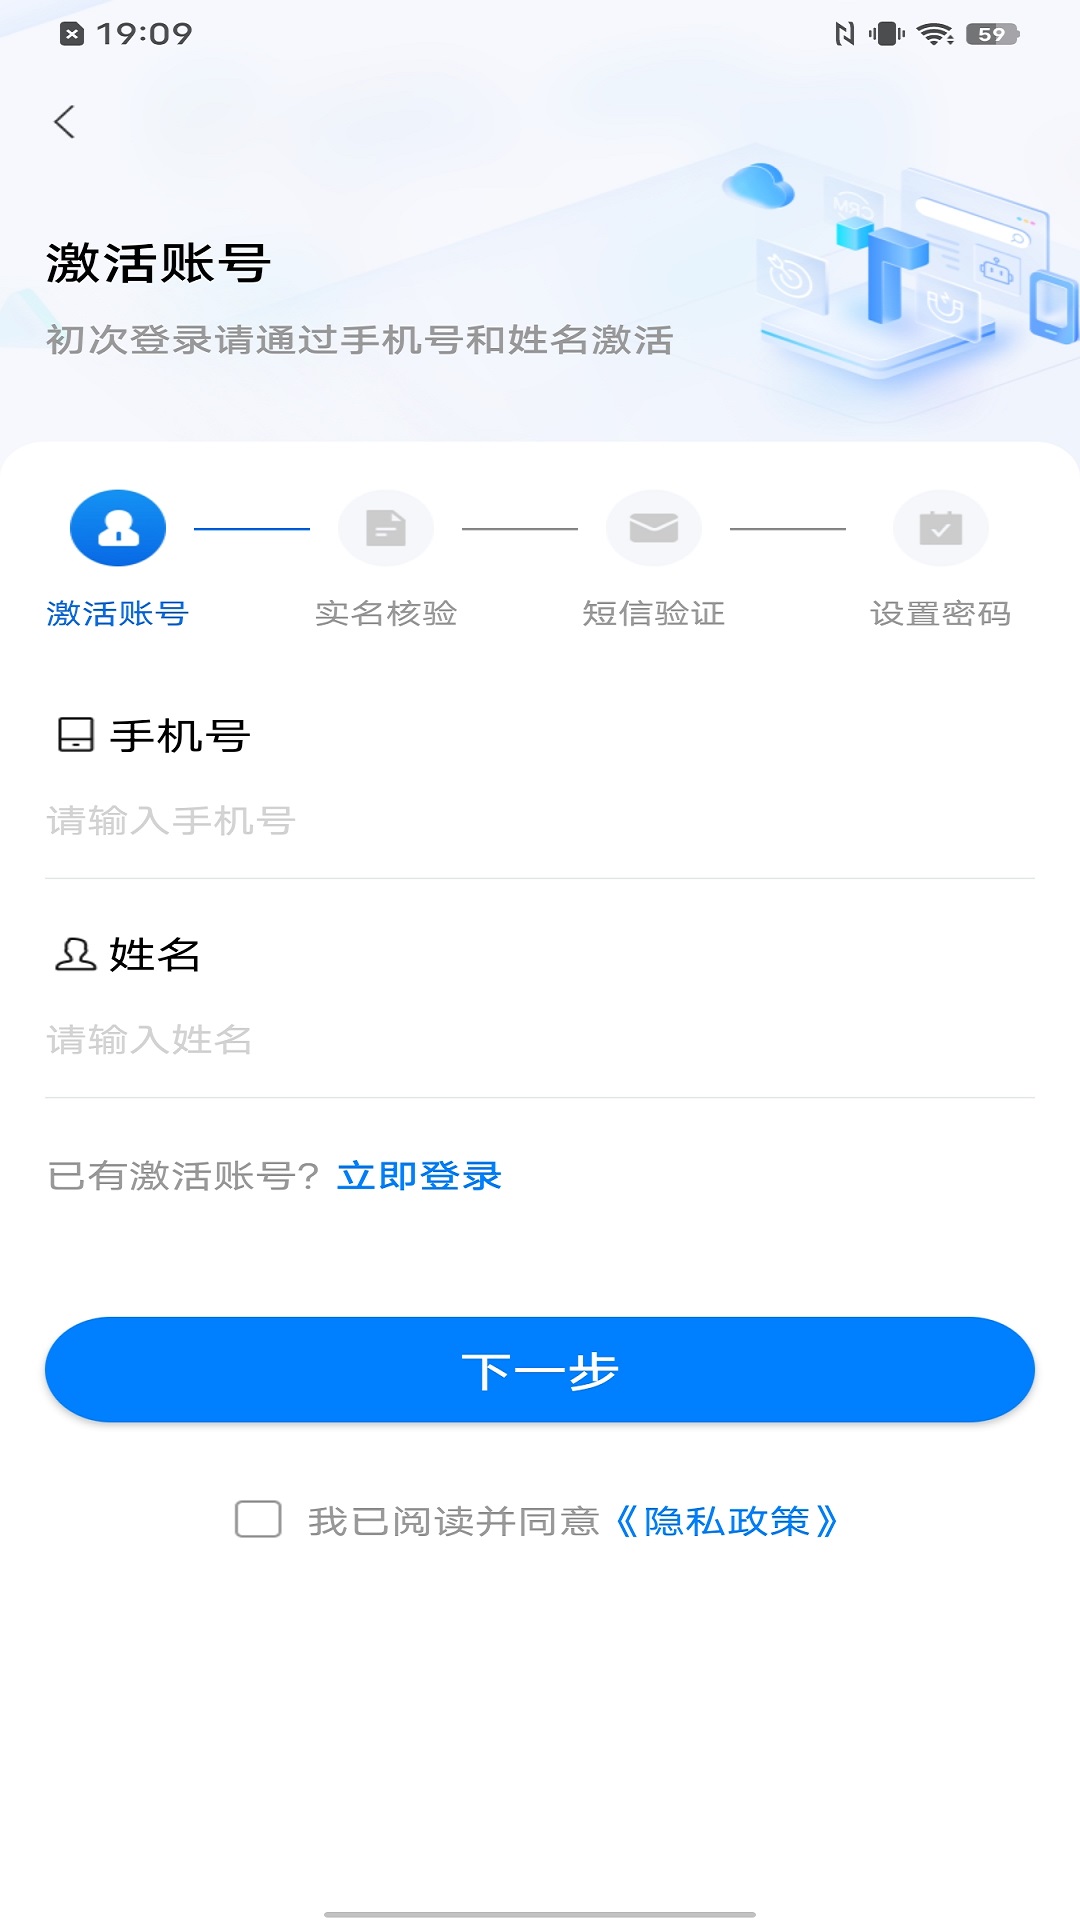 皖政通Androidapp图片1